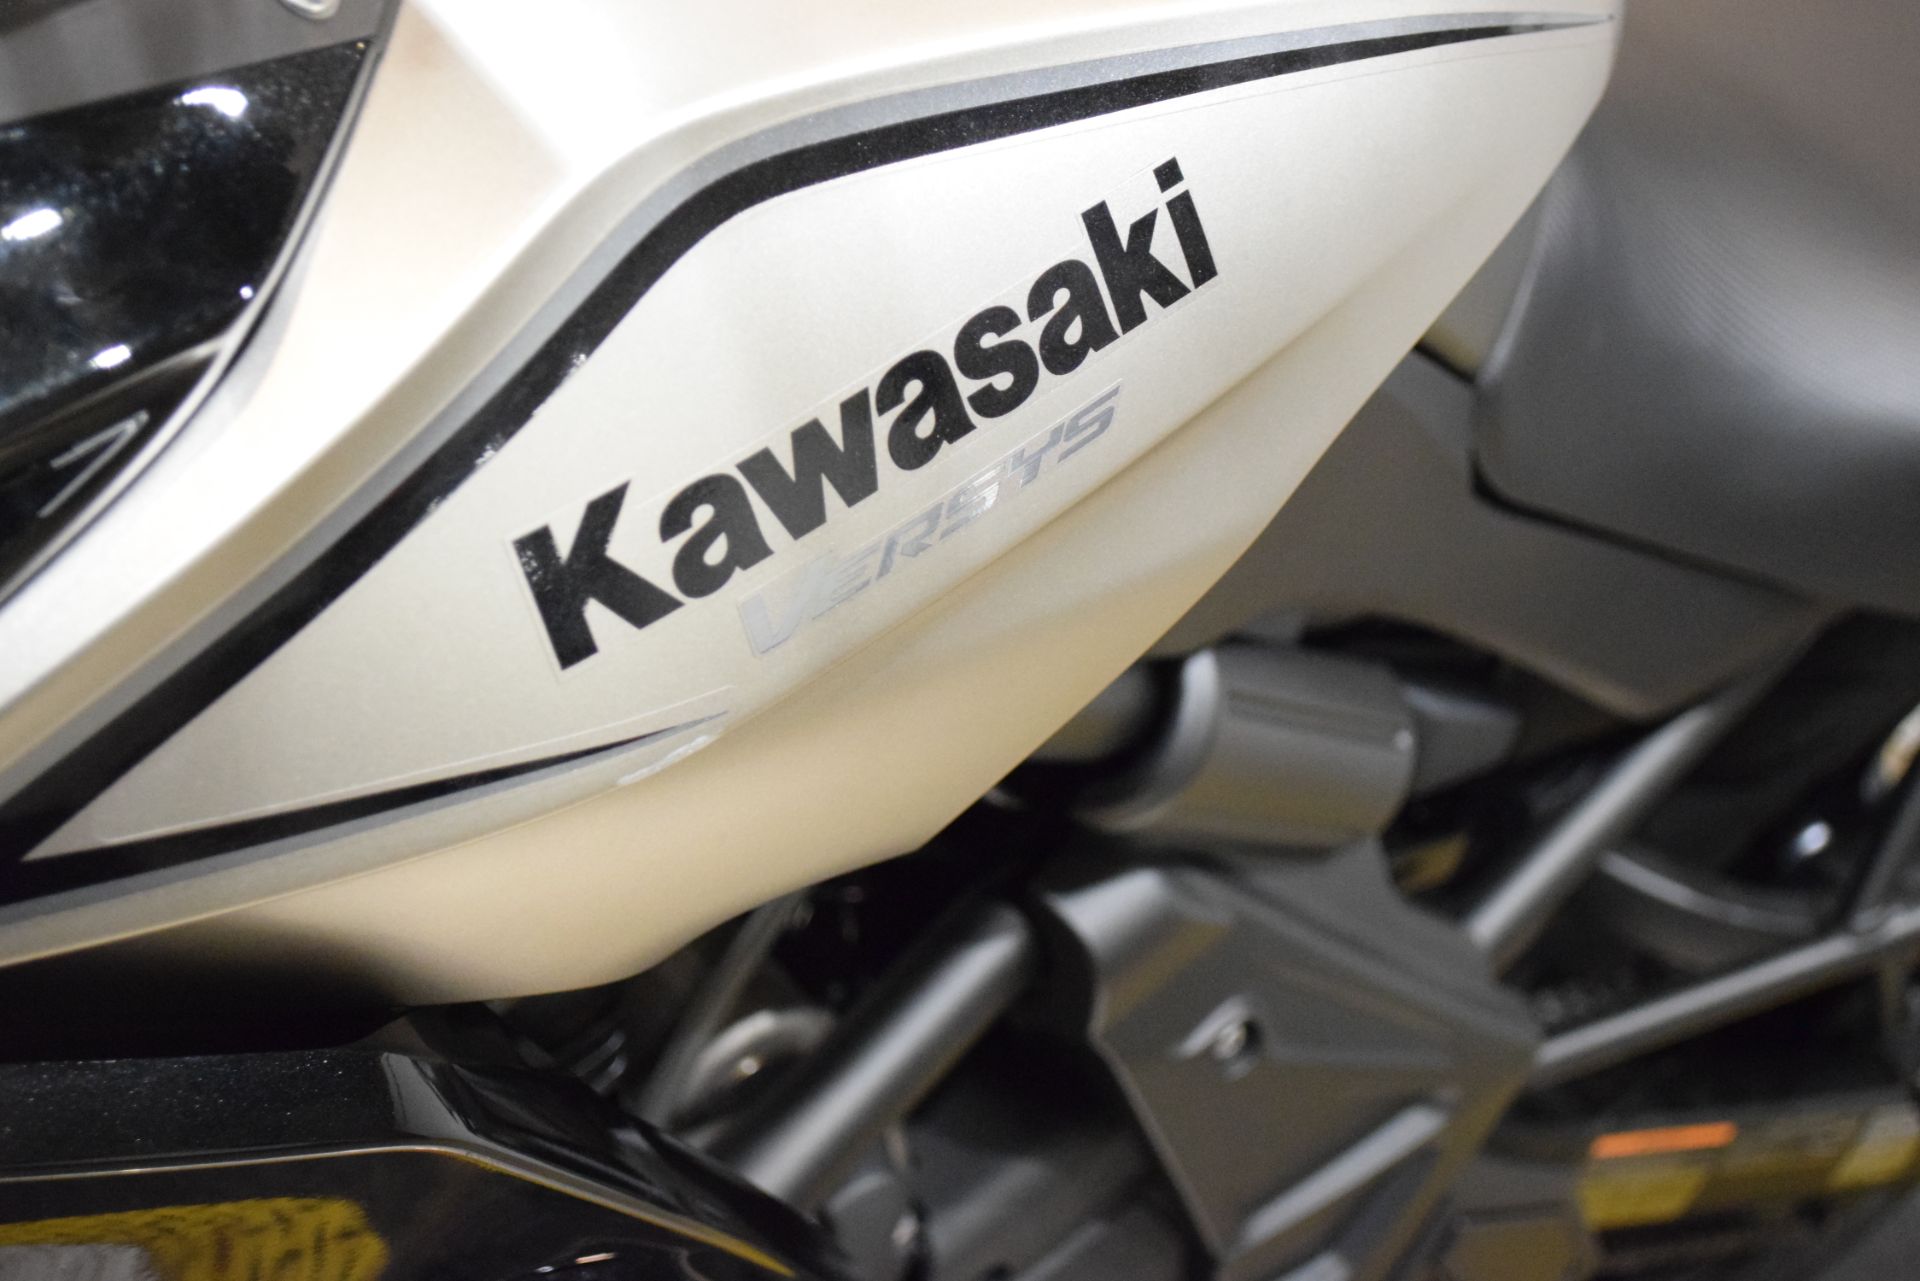 2017 Kawasaki Versys 650 ABS in Wauconda, Illinois - Photo 19